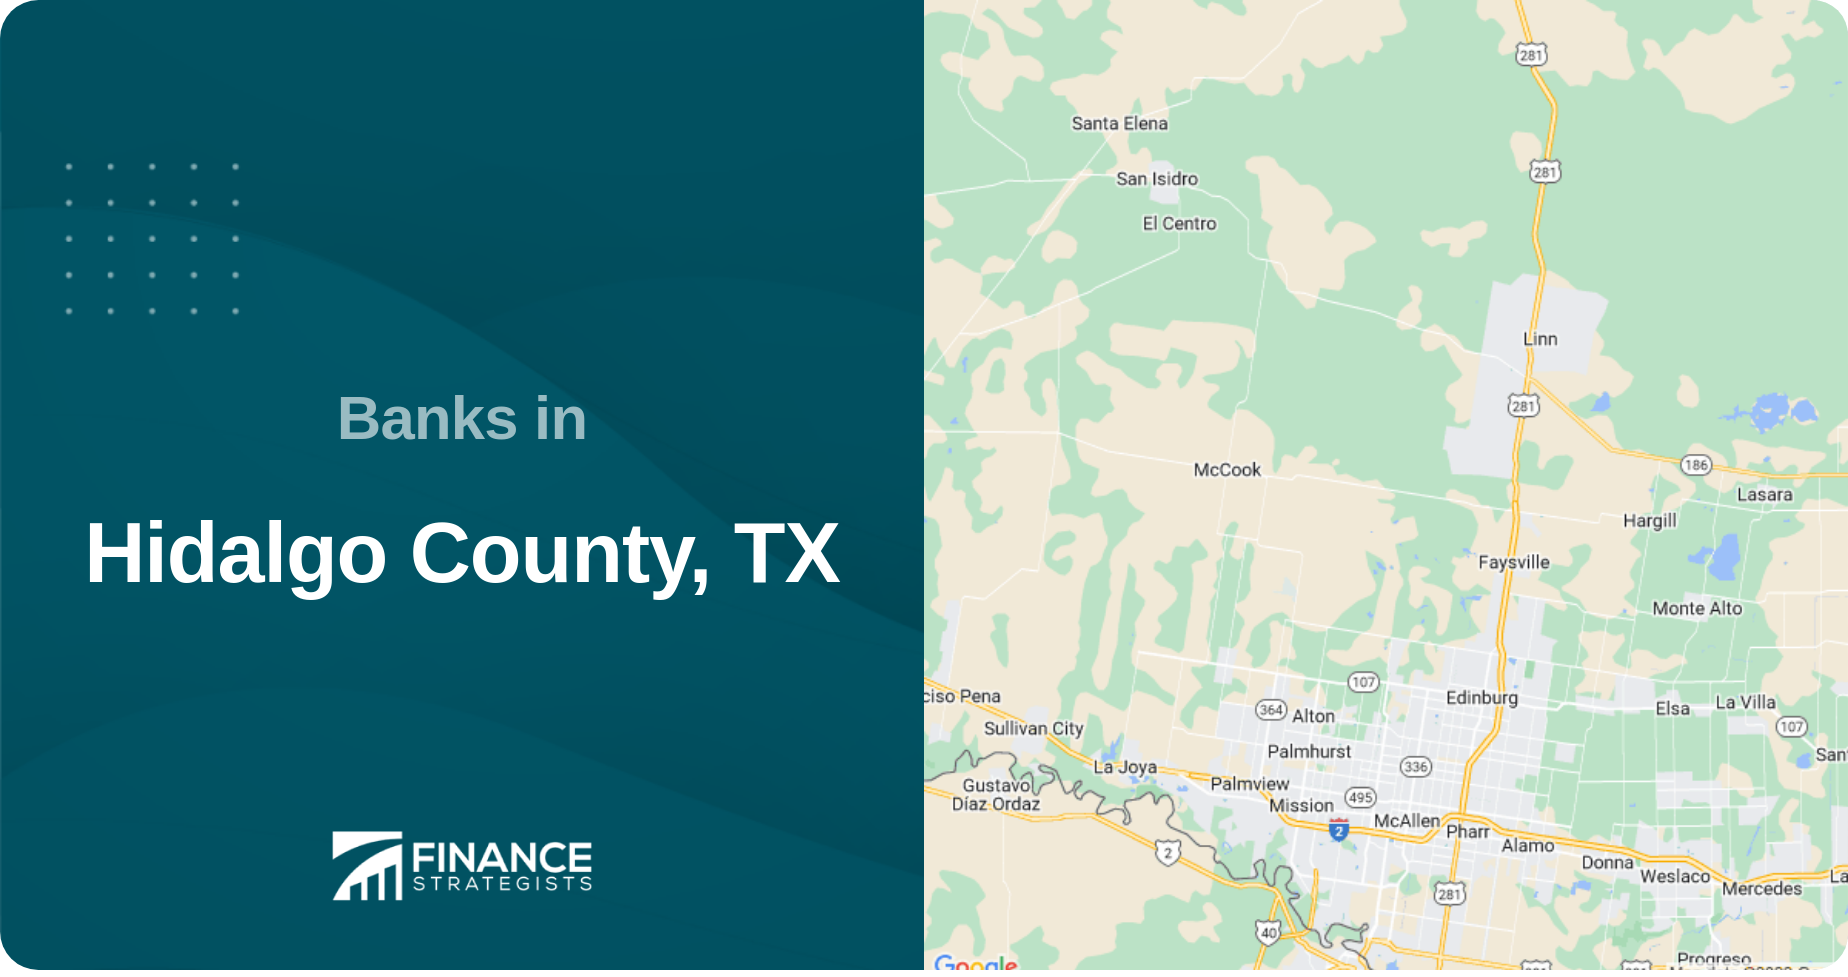 Banks in Hidalgo County, TX